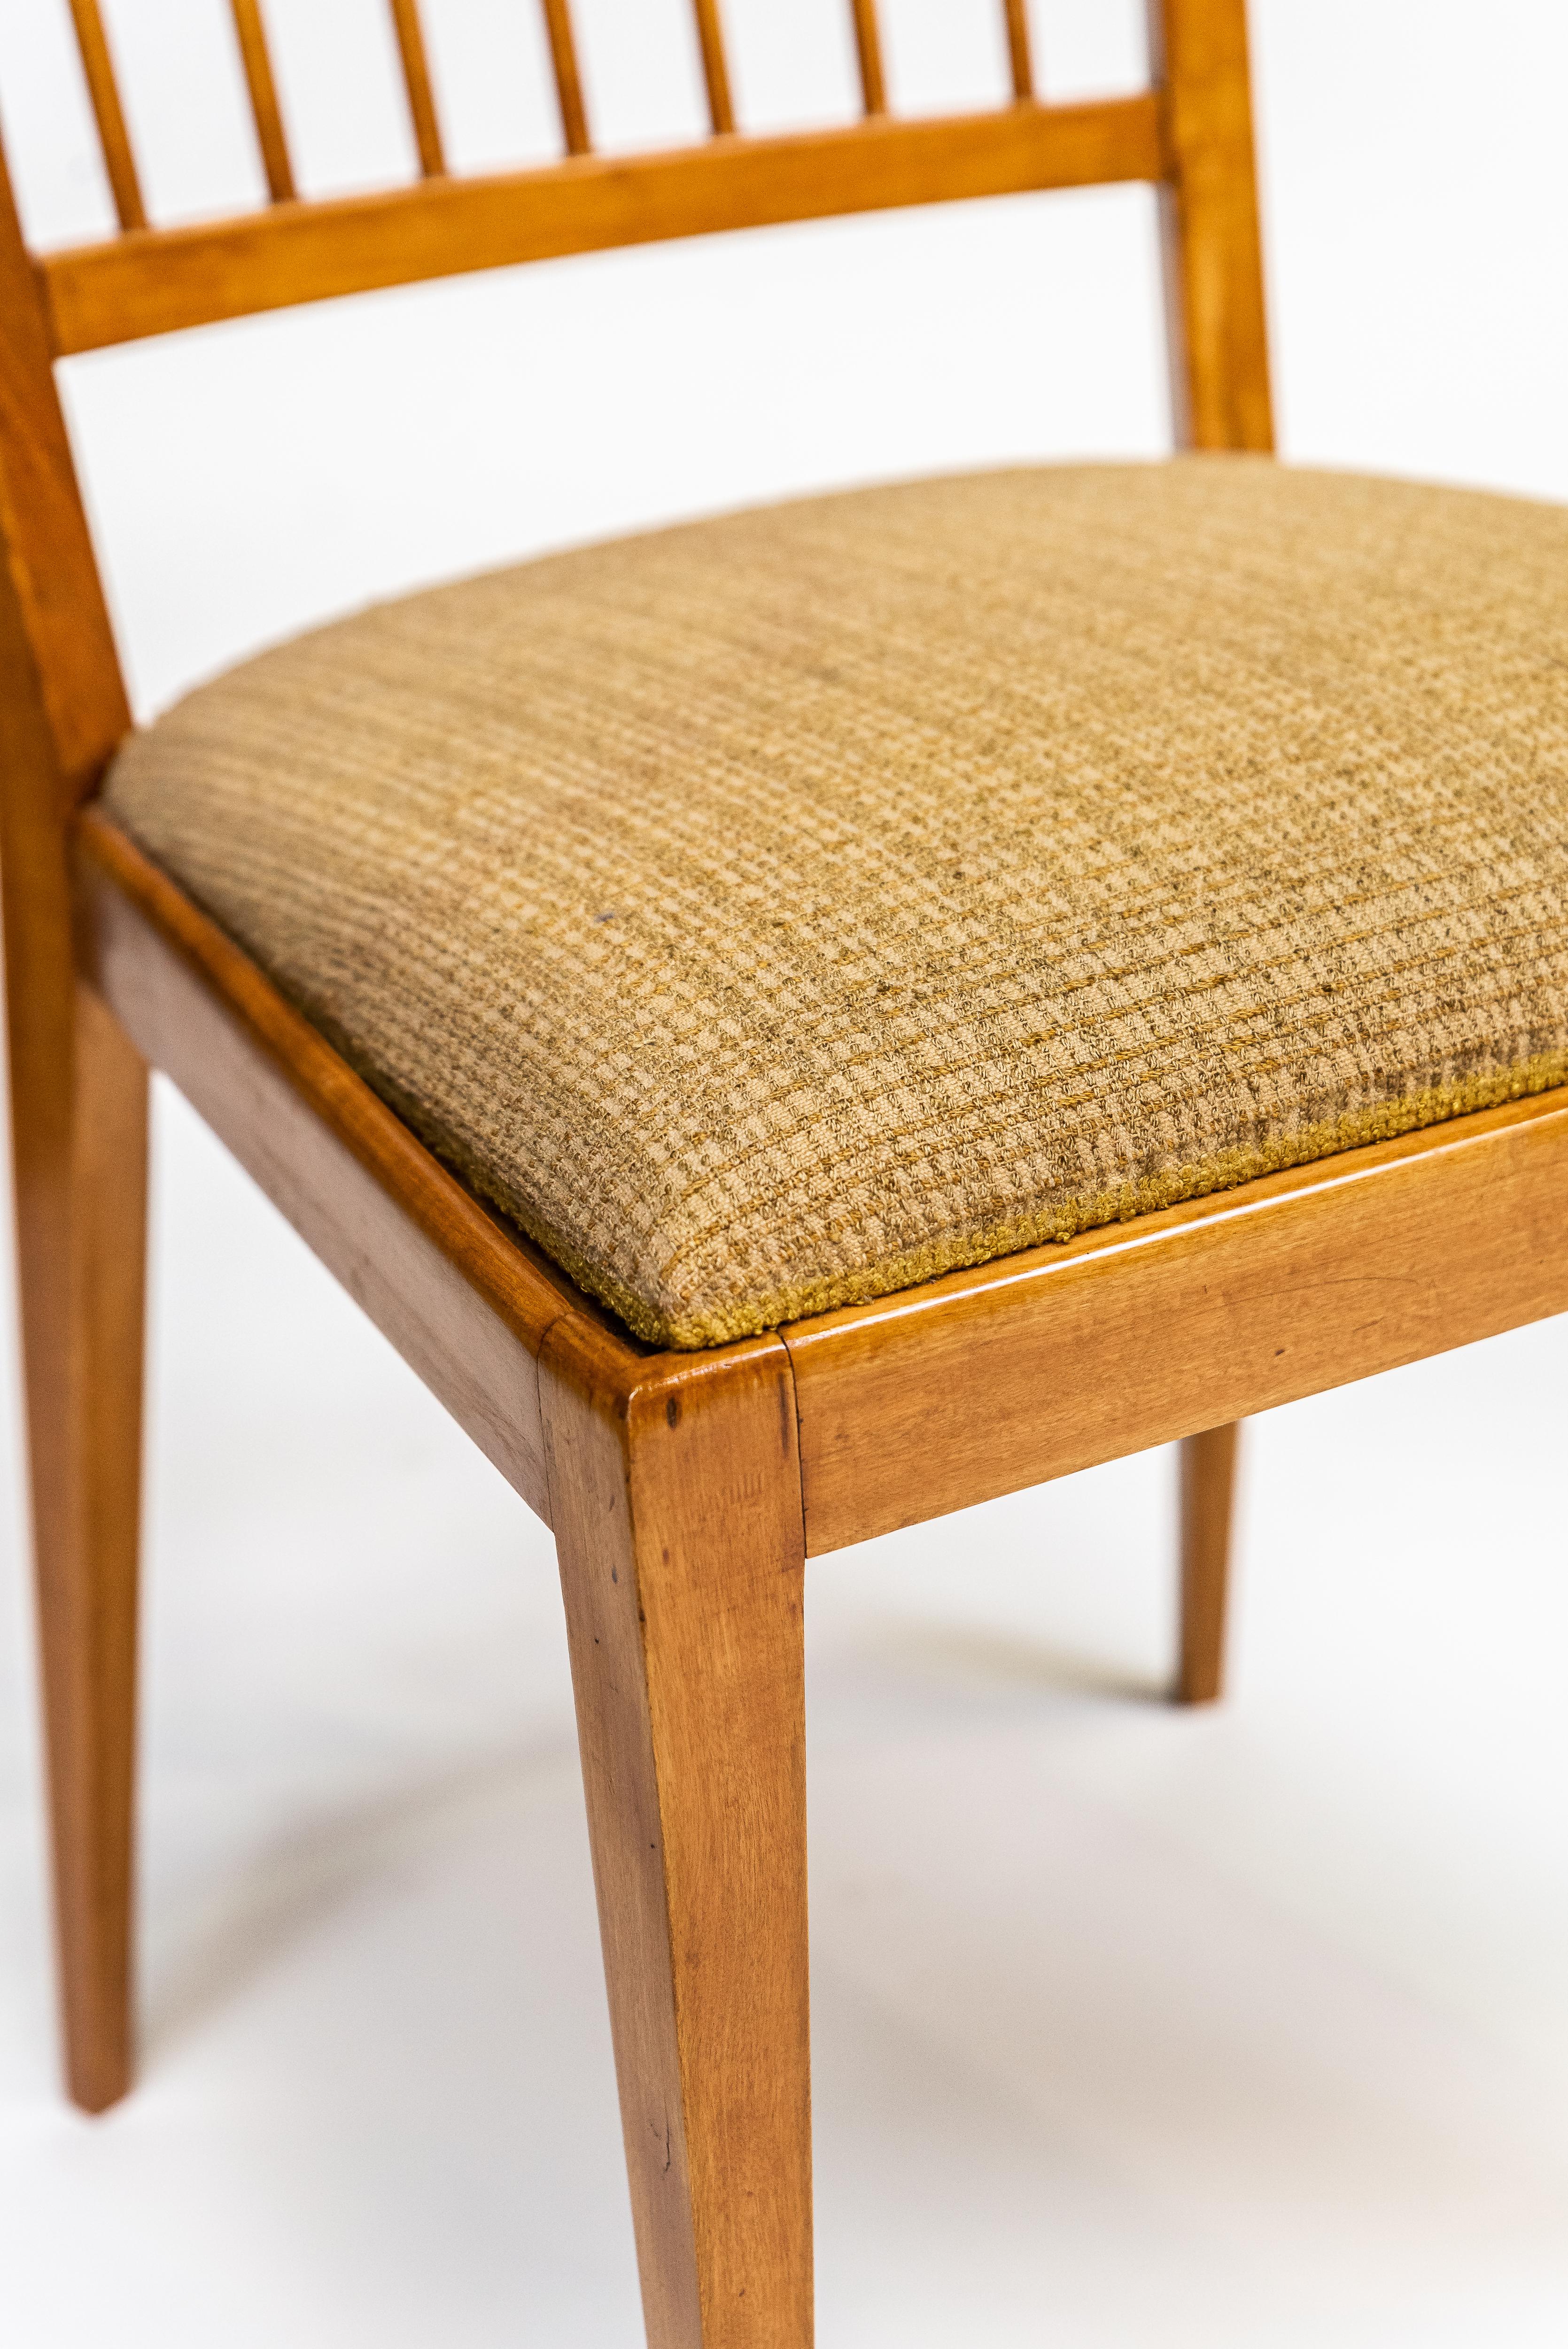 Upholstery Joaquim Tenreiro, Set 6 Chairs, 1950